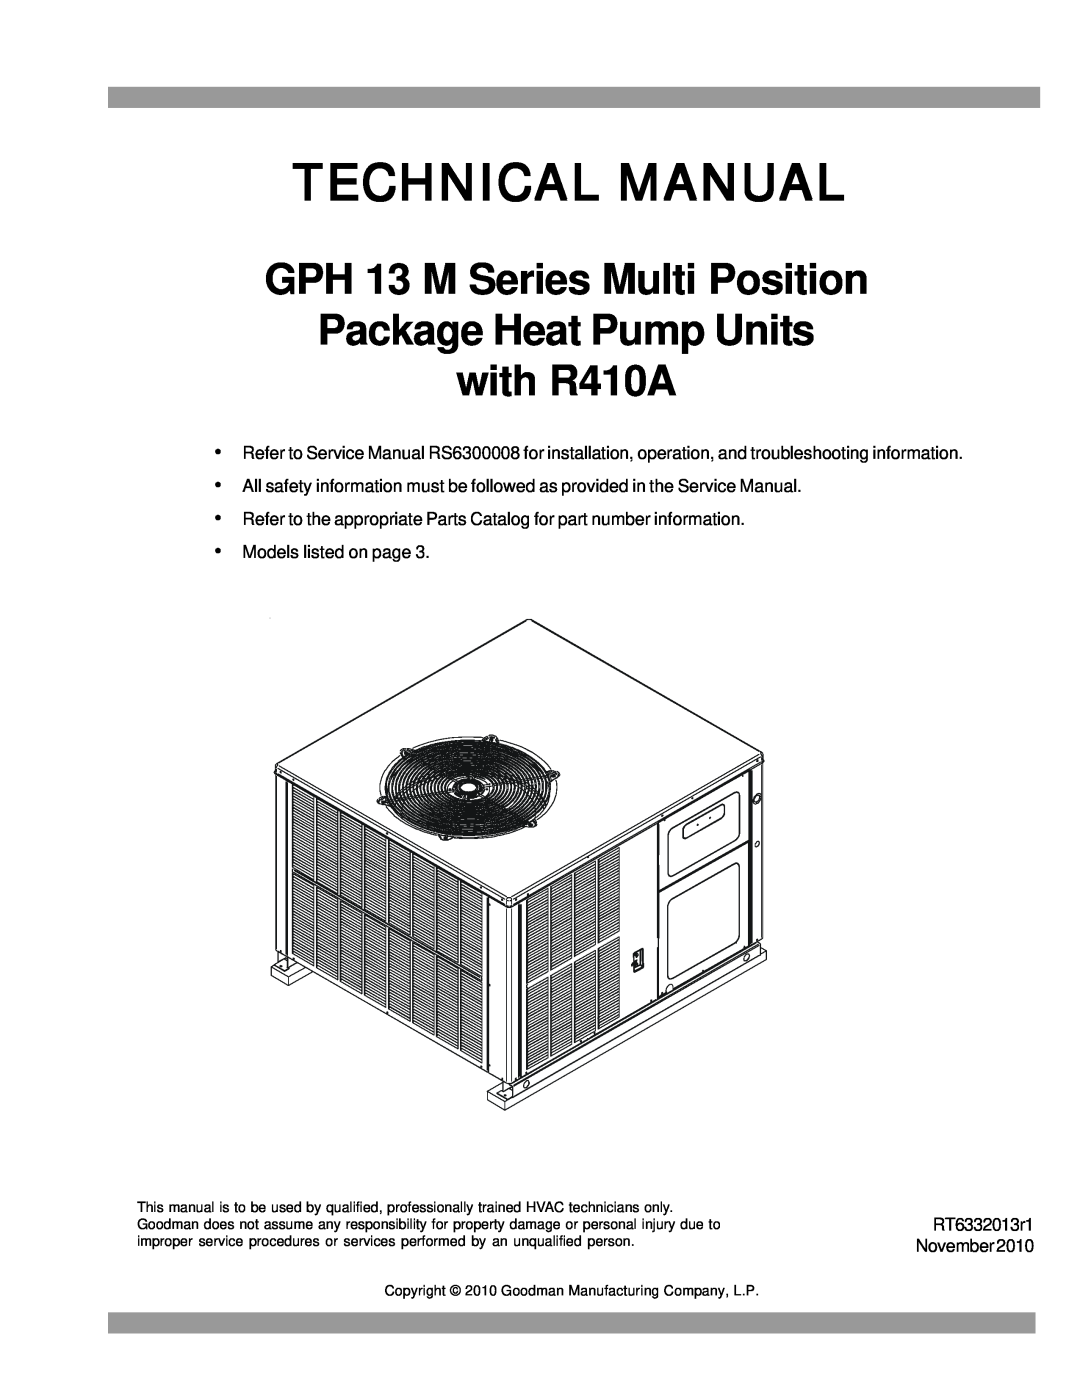 Goodman Mfg RT6332013r1 service manual Technical Manual, GPH 13 M Series Multi Position 